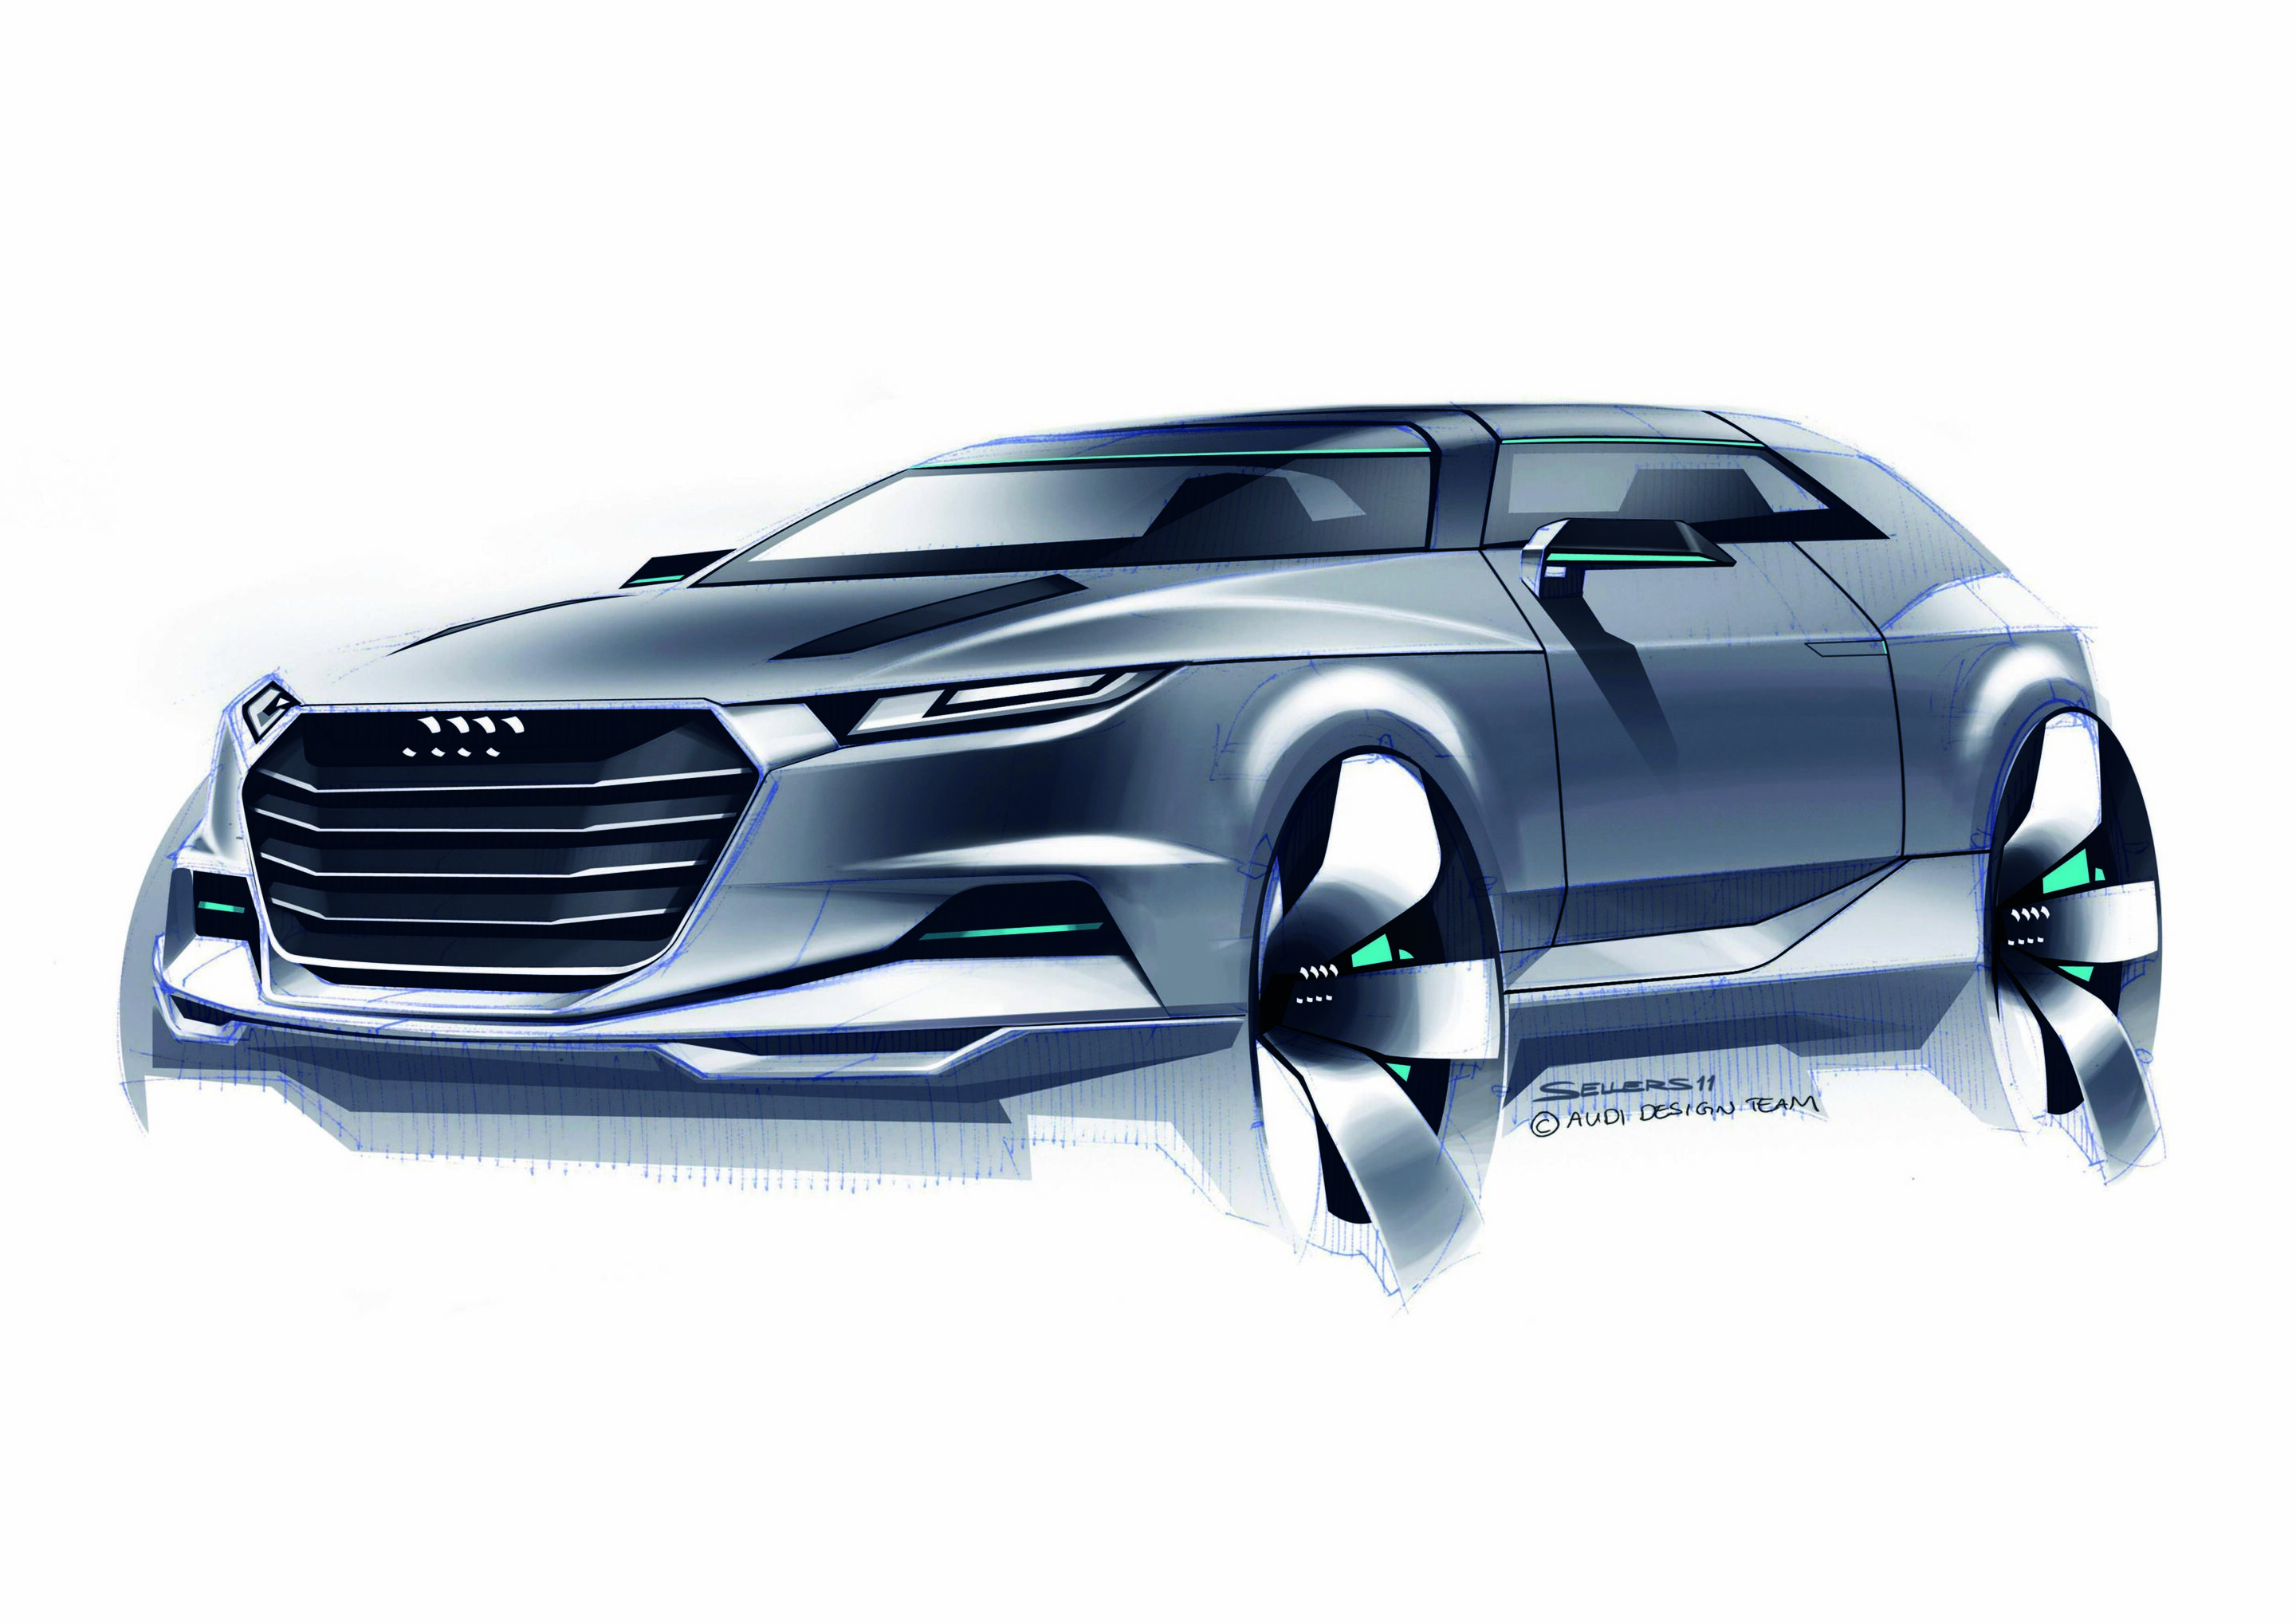 Audi crosslane coupé concept car